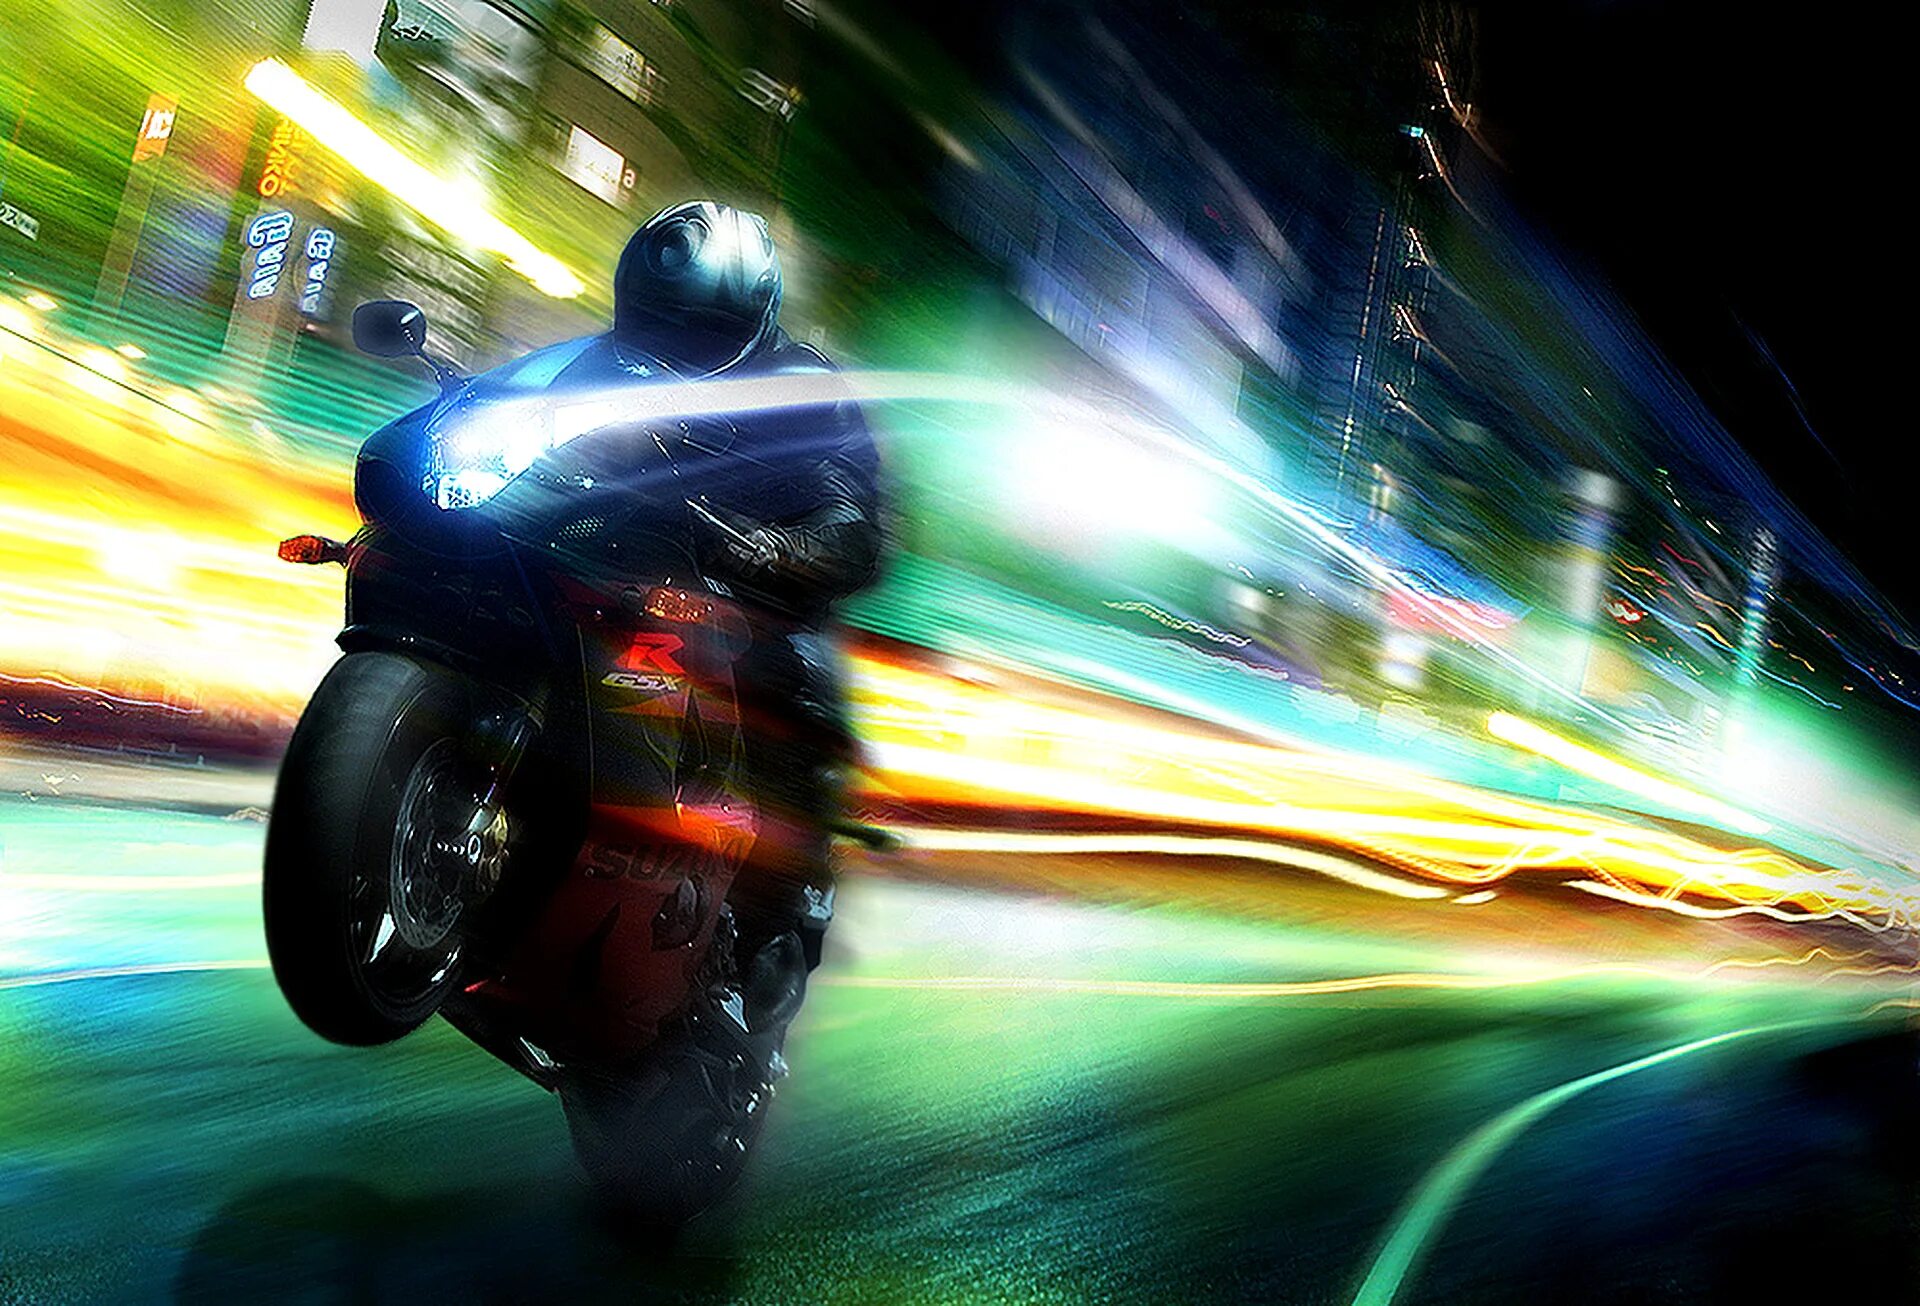 Включи мопед. Мотоцикл скорость. Мотоцикл в движении. Мотоциклист на скорости. Мотоцикл мчится.